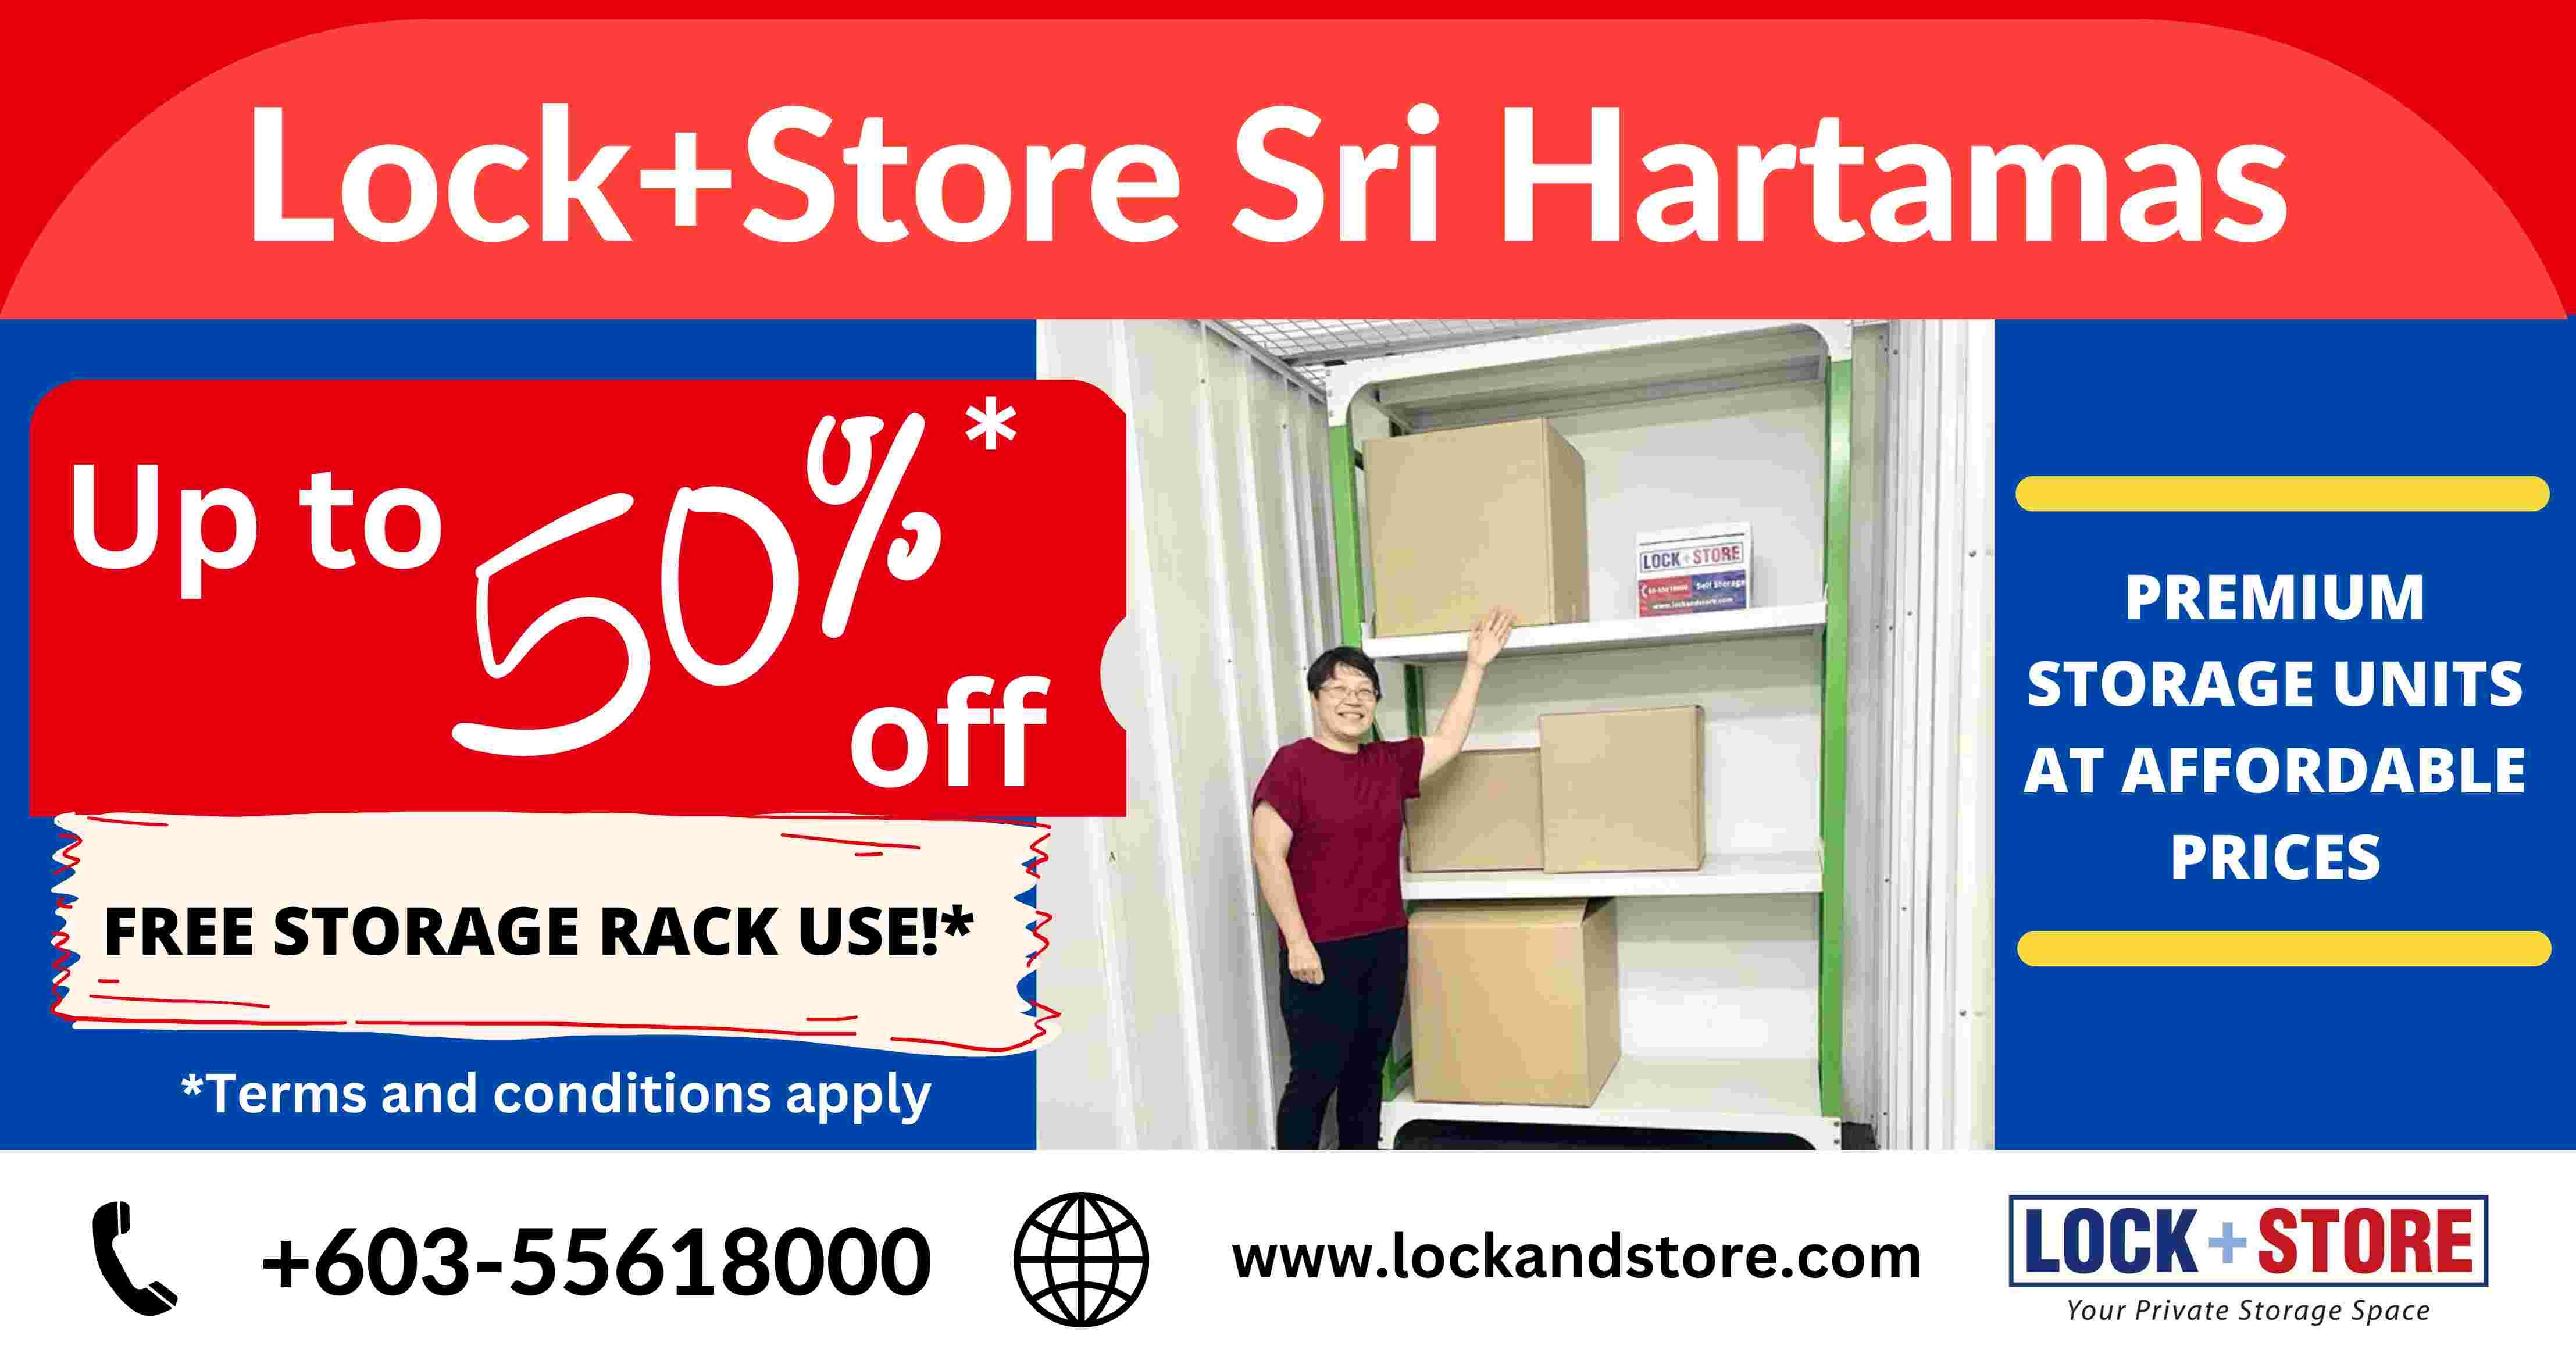 Lock+Store Sri Hartamas self storage unit